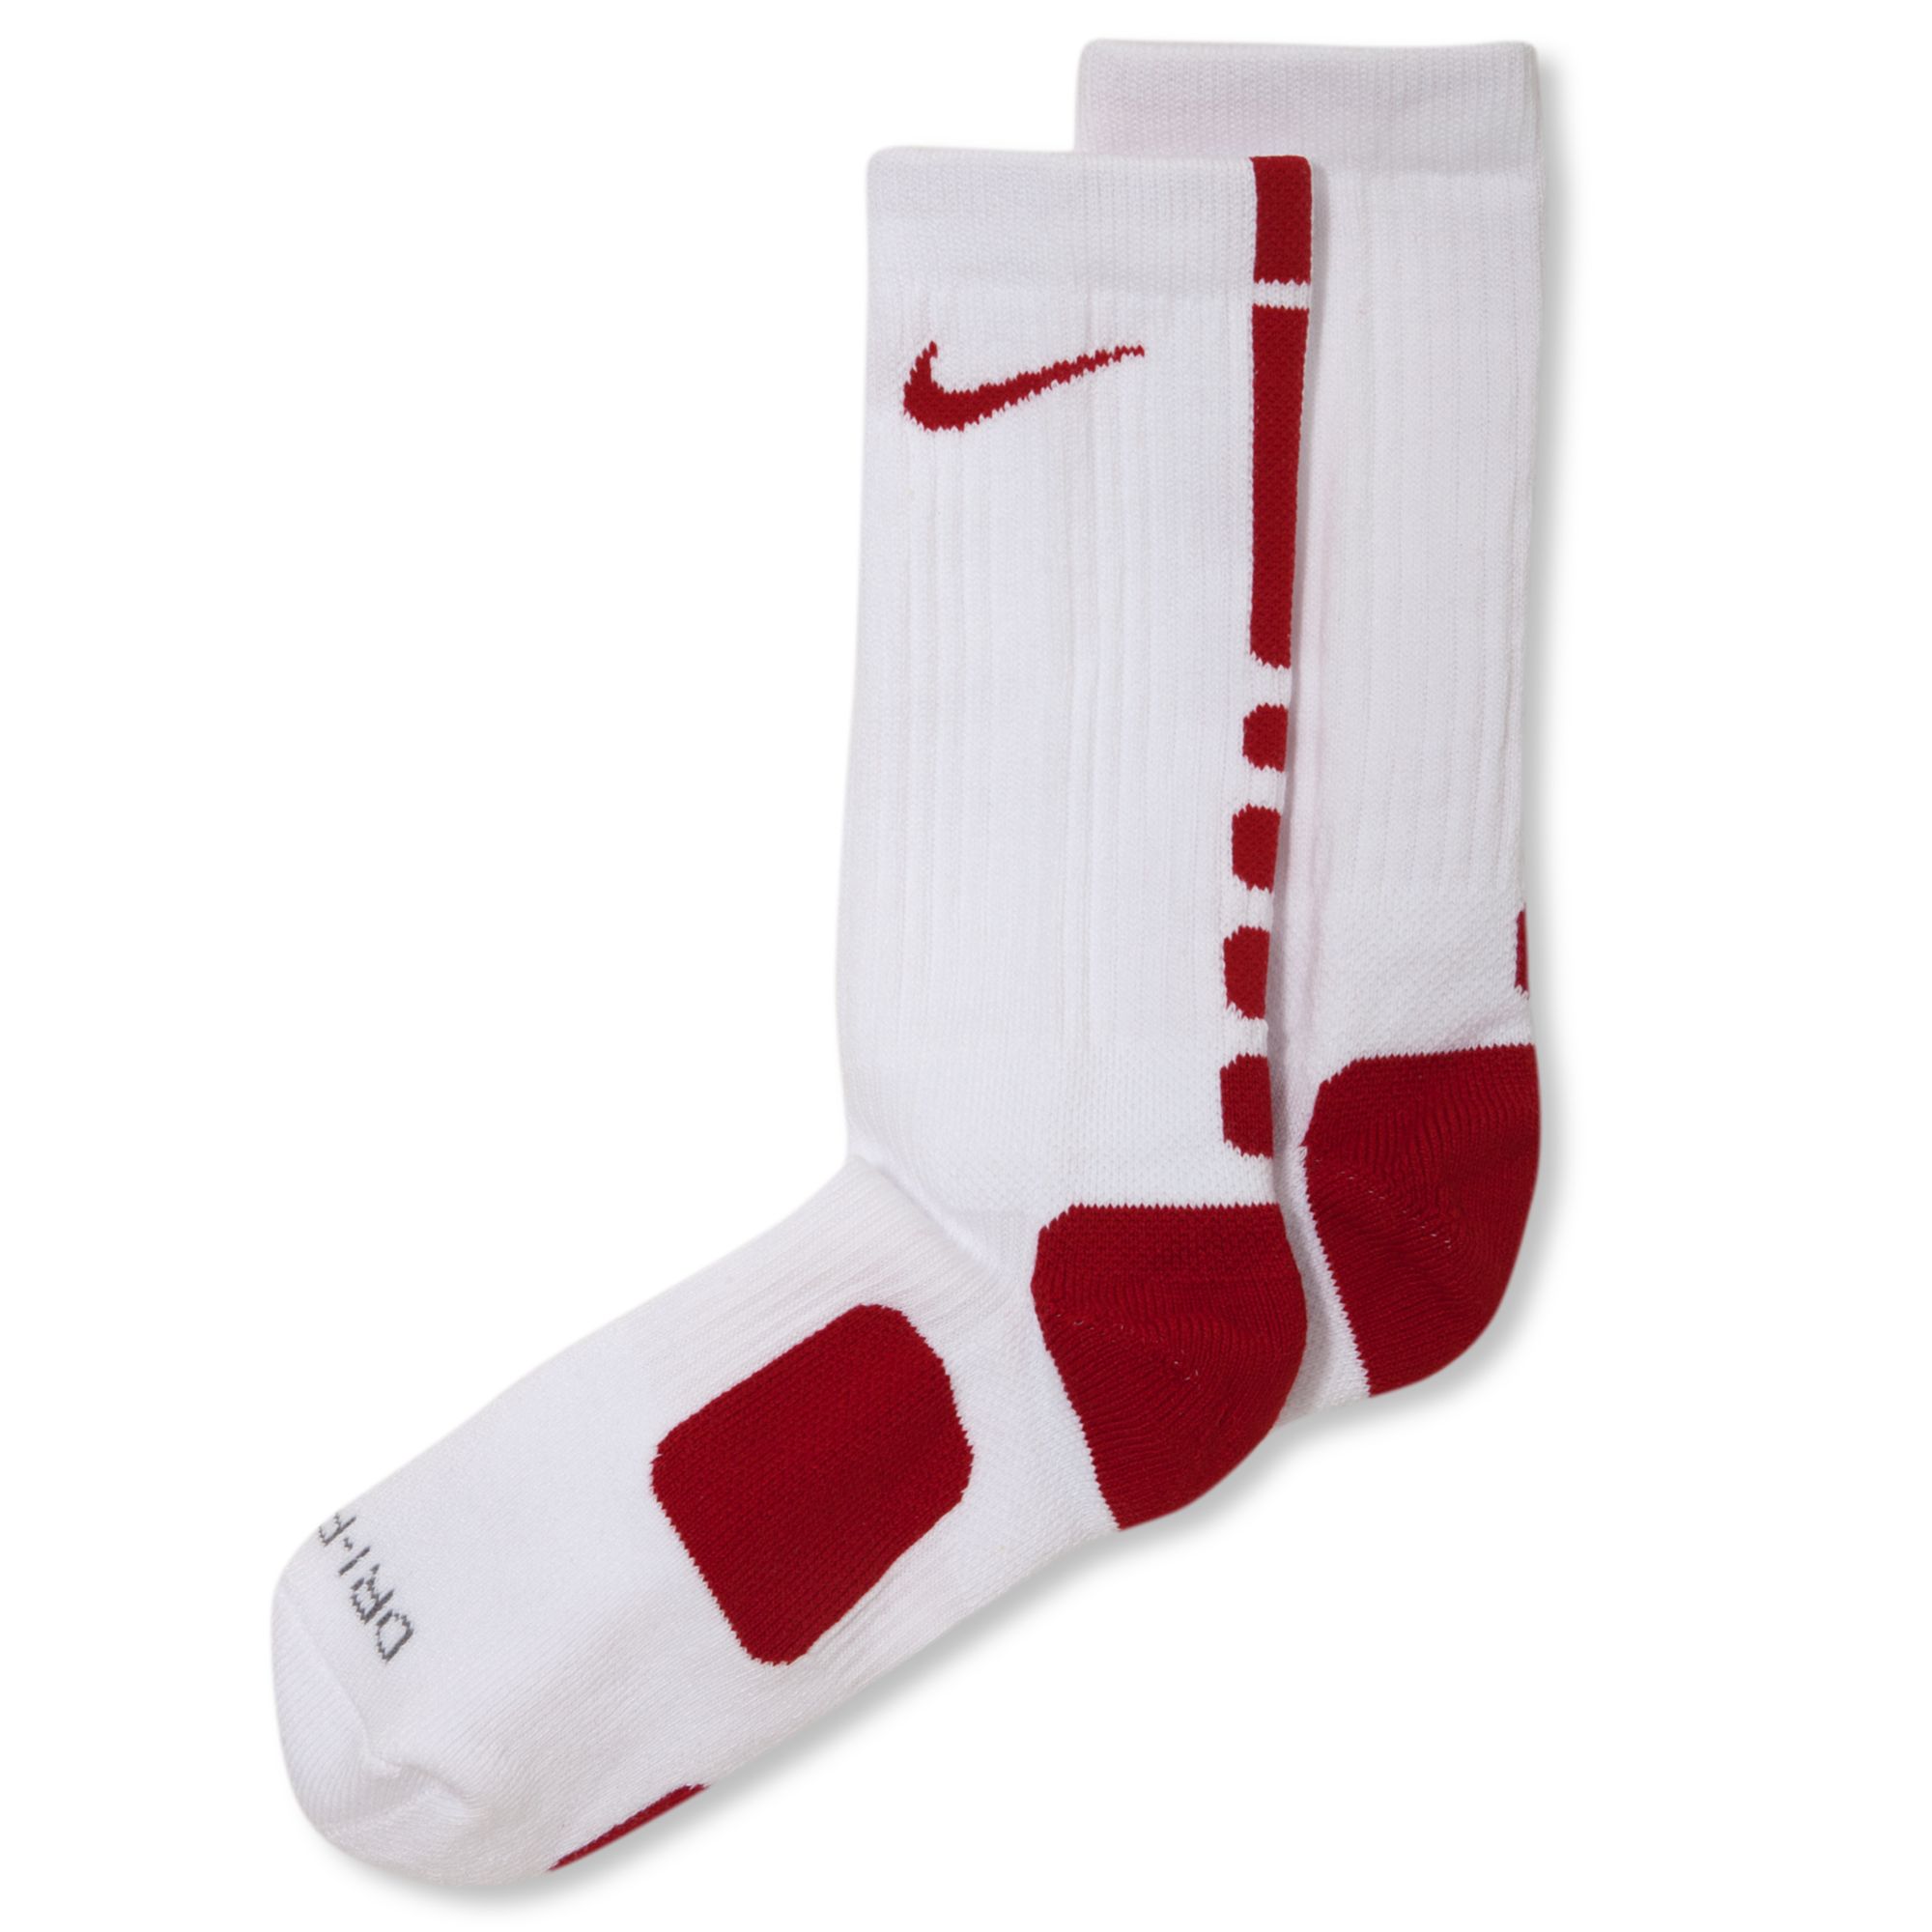 red nike basketball socks